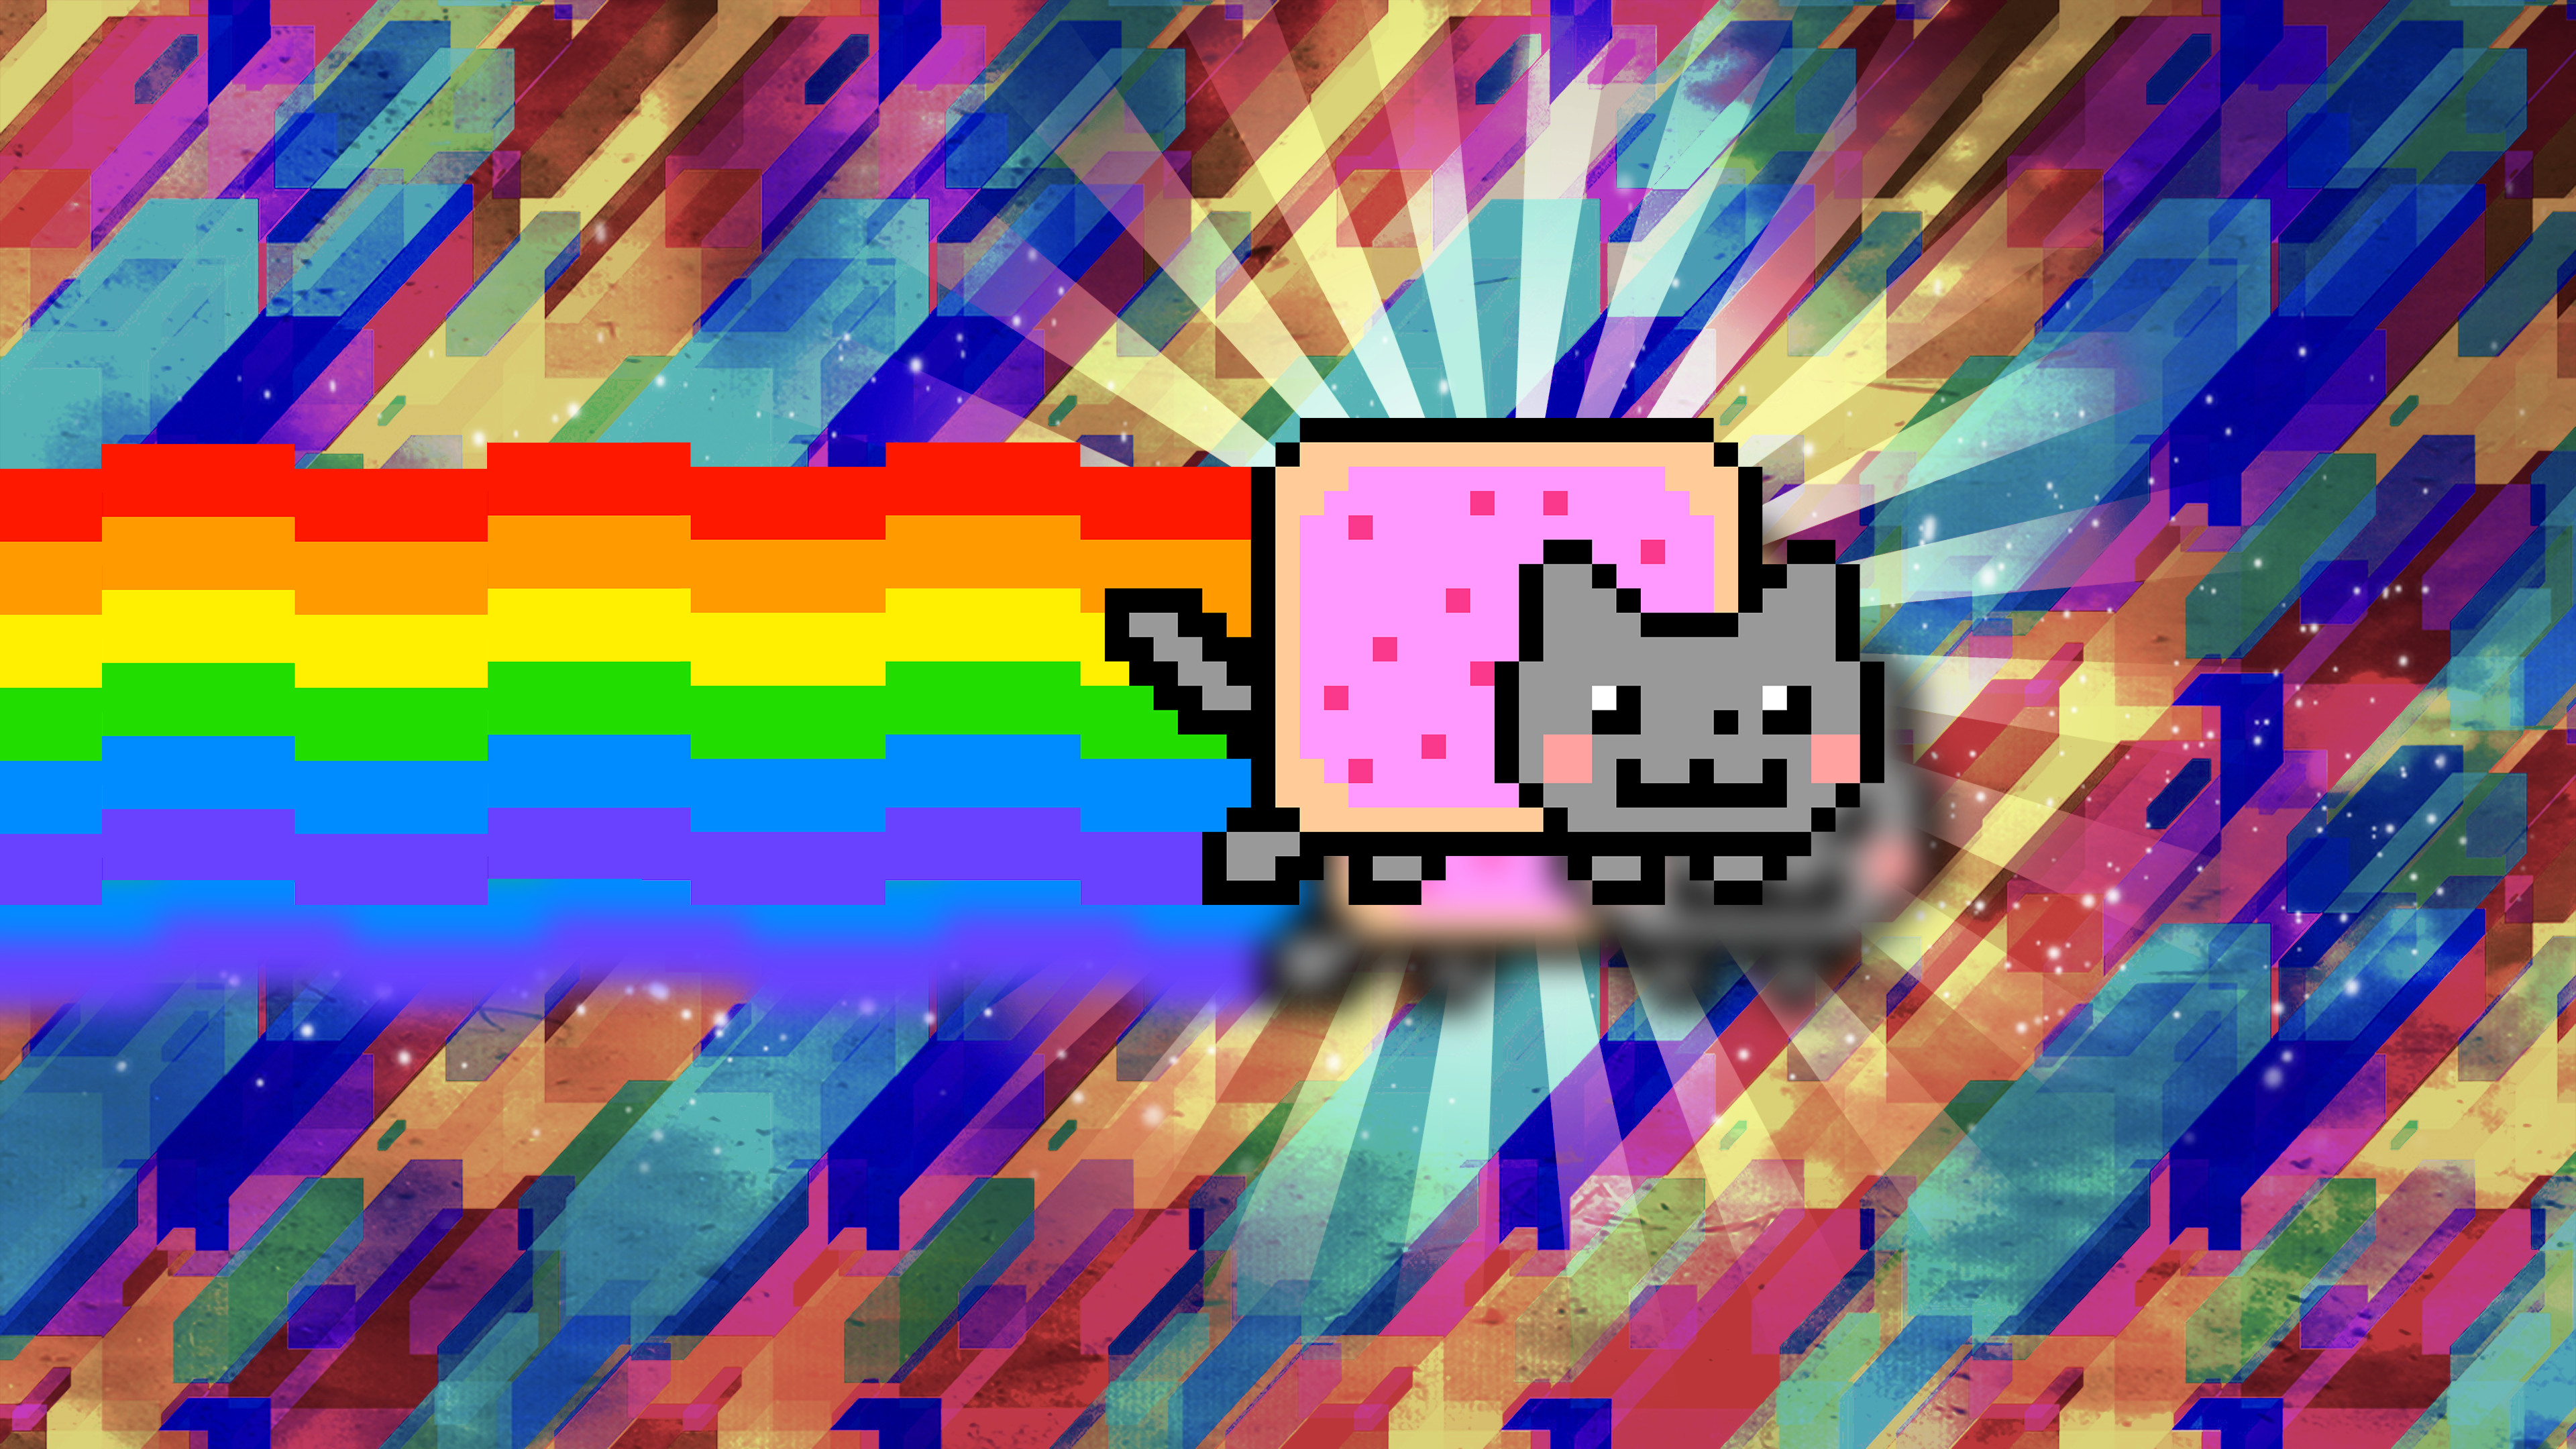 3840x2160 Nyan cat wallpaper by MilosOnYoutube Nyan cat wallpaper by MilosOnYoutube